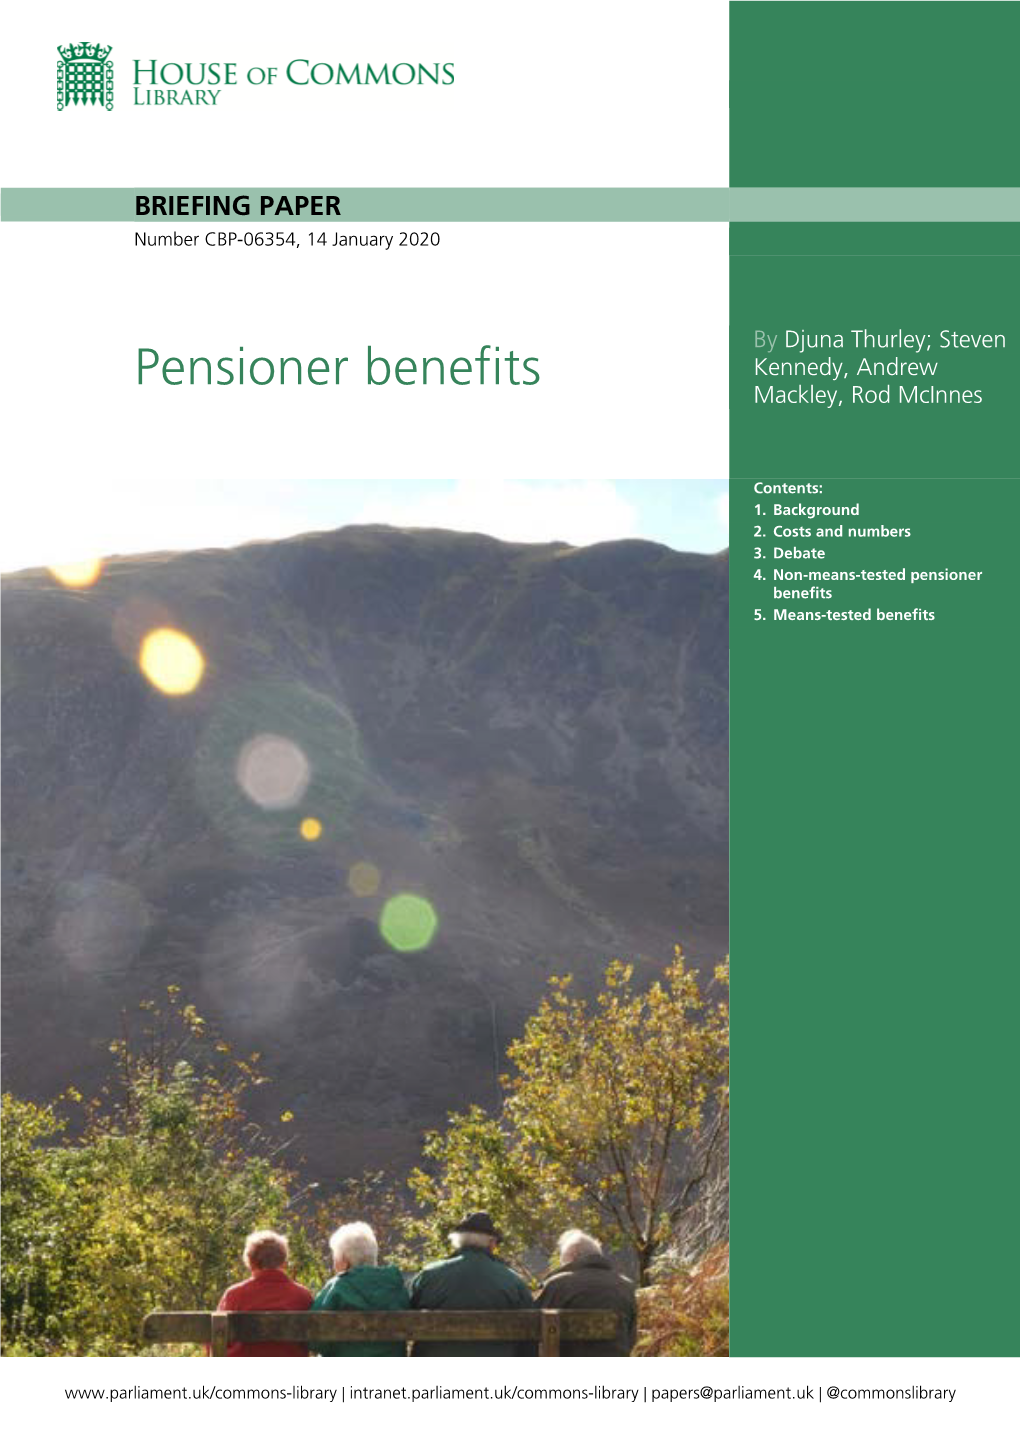 Pensioner Benefits Mackley, Rod Mcinnes